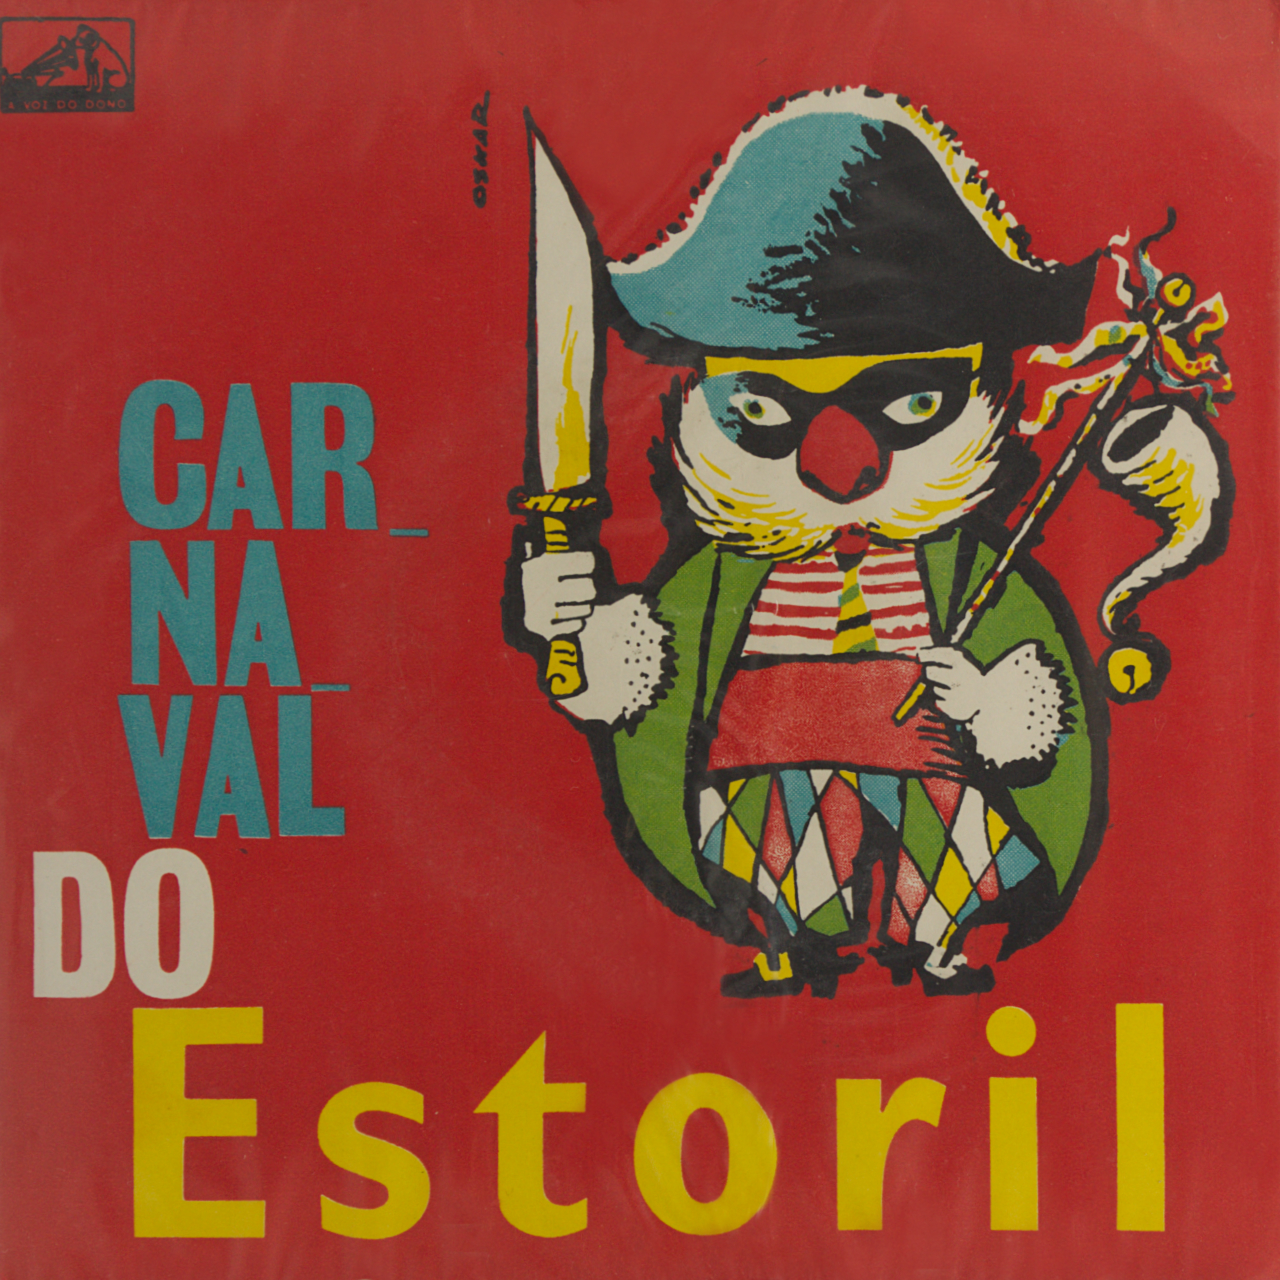 Carnaval do Estoril